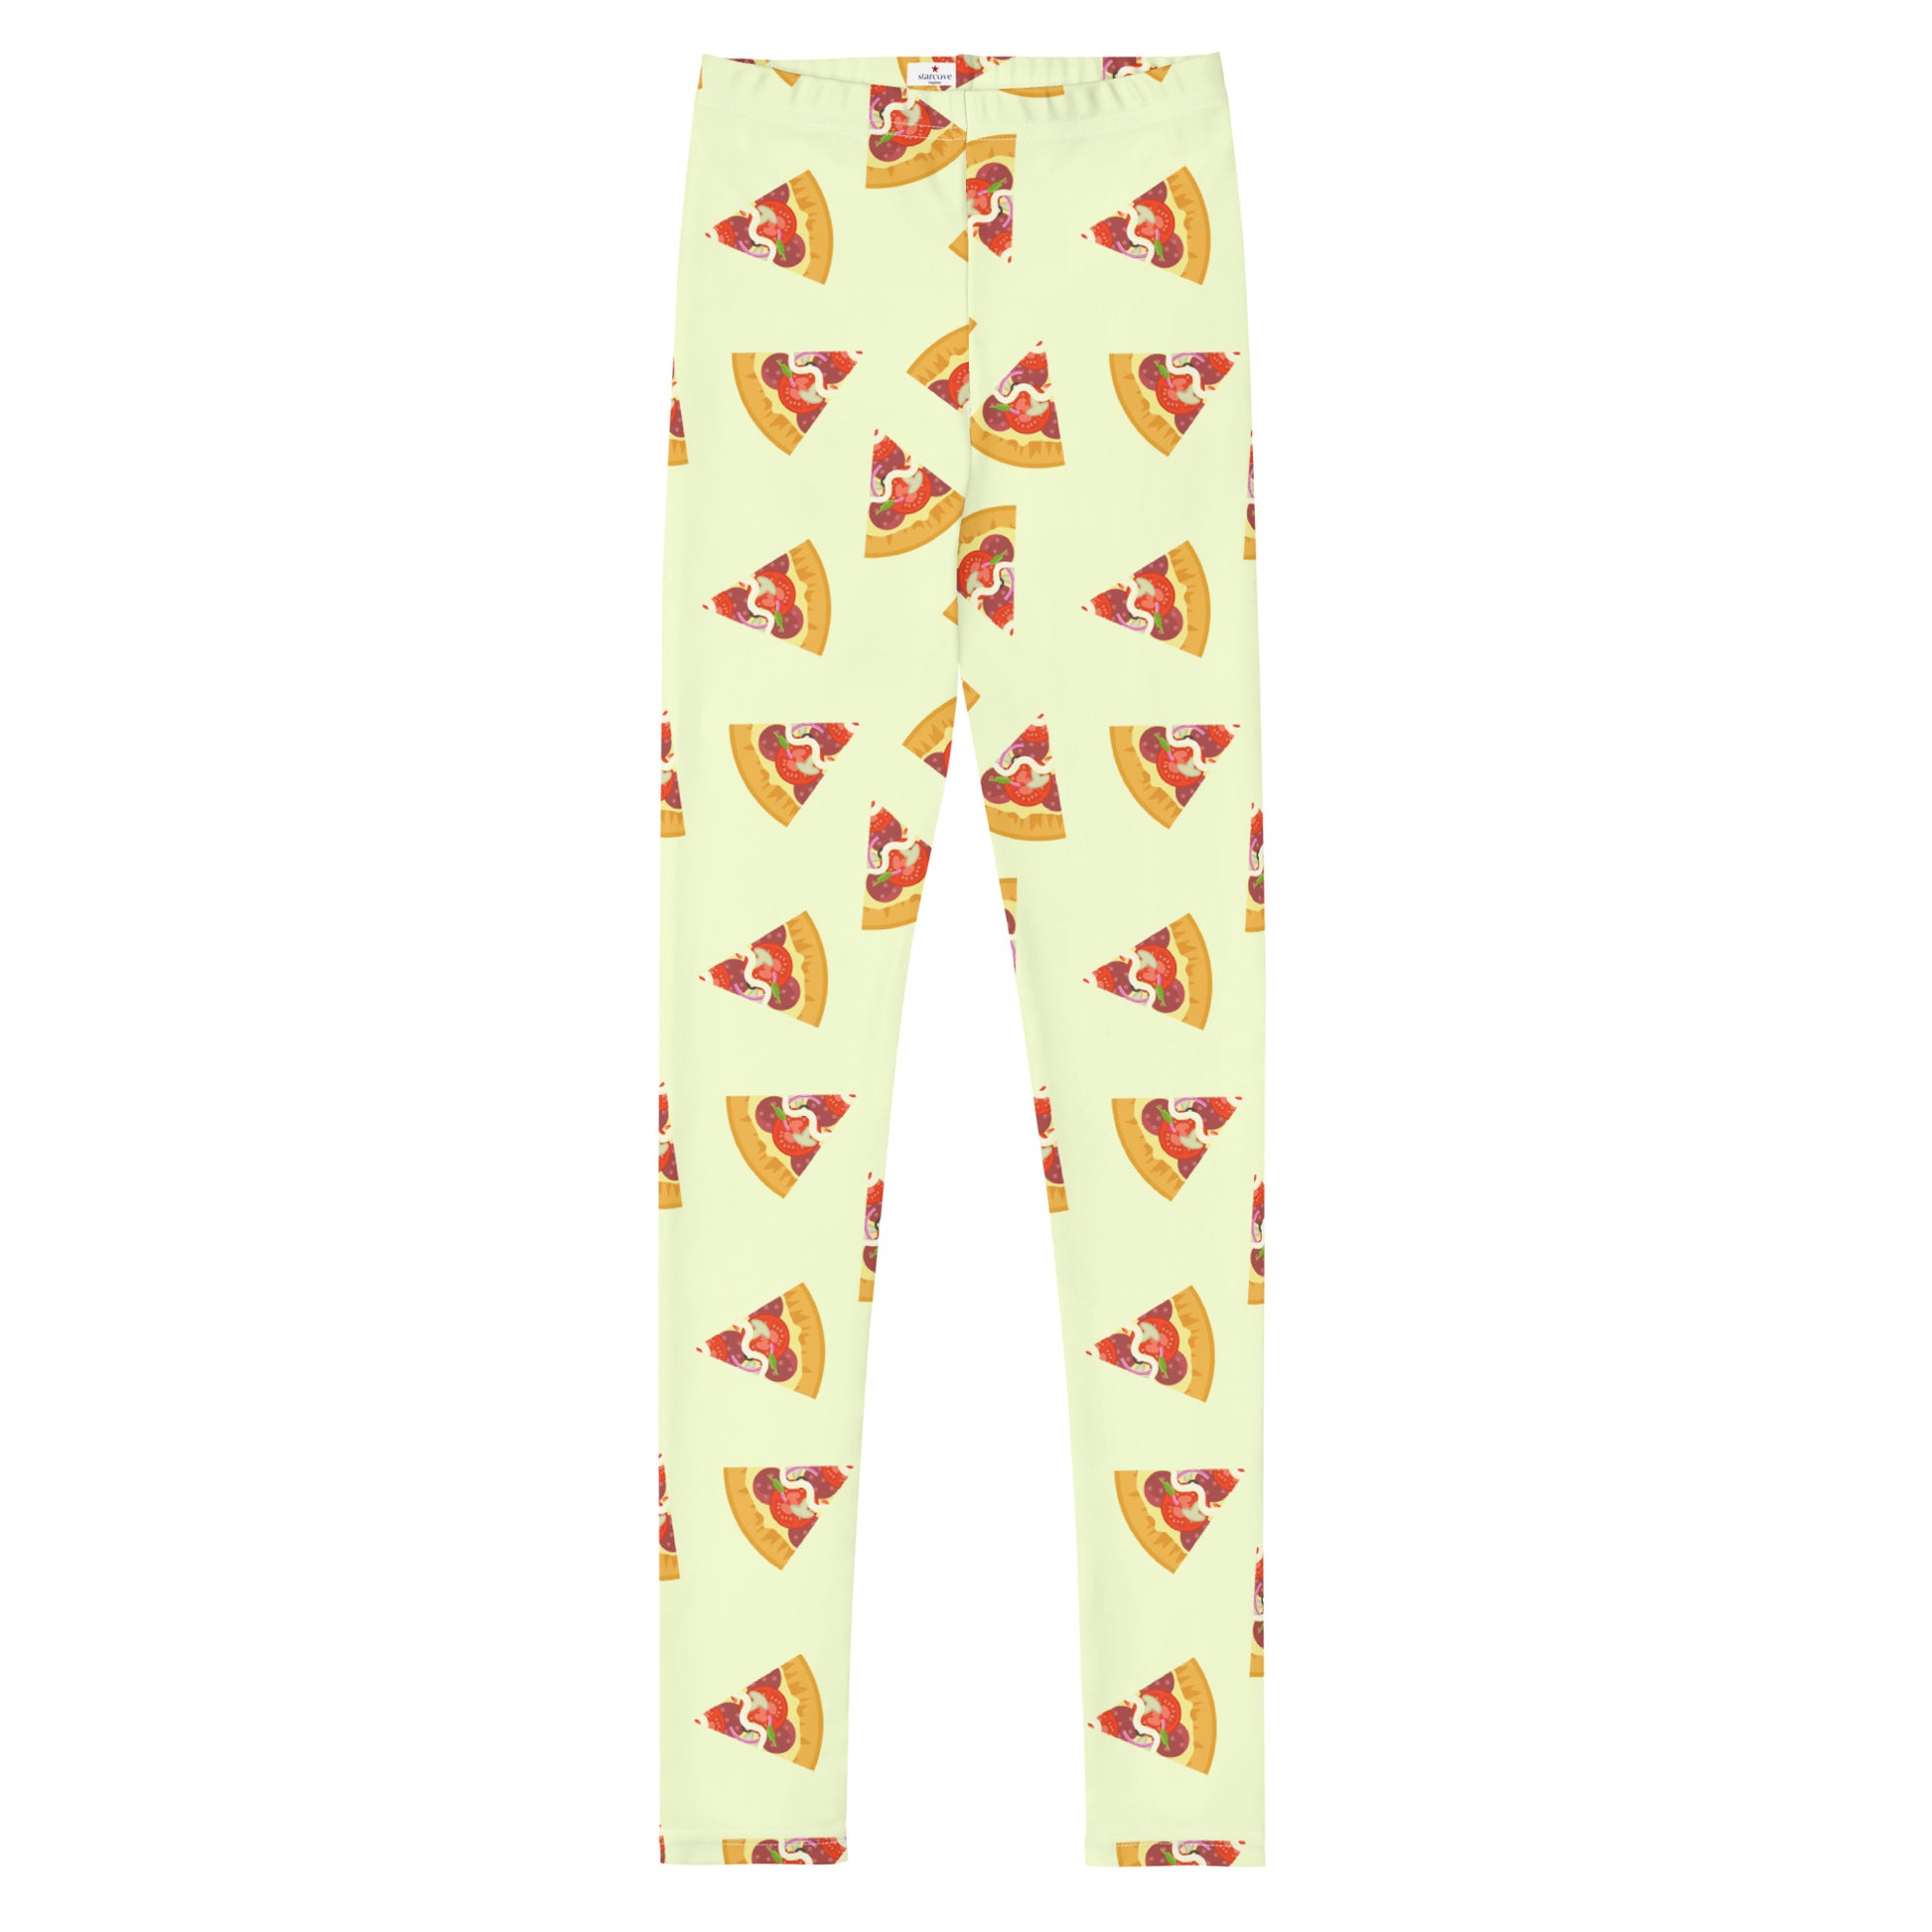 Pizza Slices Girls Leggings (8-20), Food Youth Teen Cute Printed Kids Yoga Pants Graphic Print Fun Tights Tween Starcove Fashion